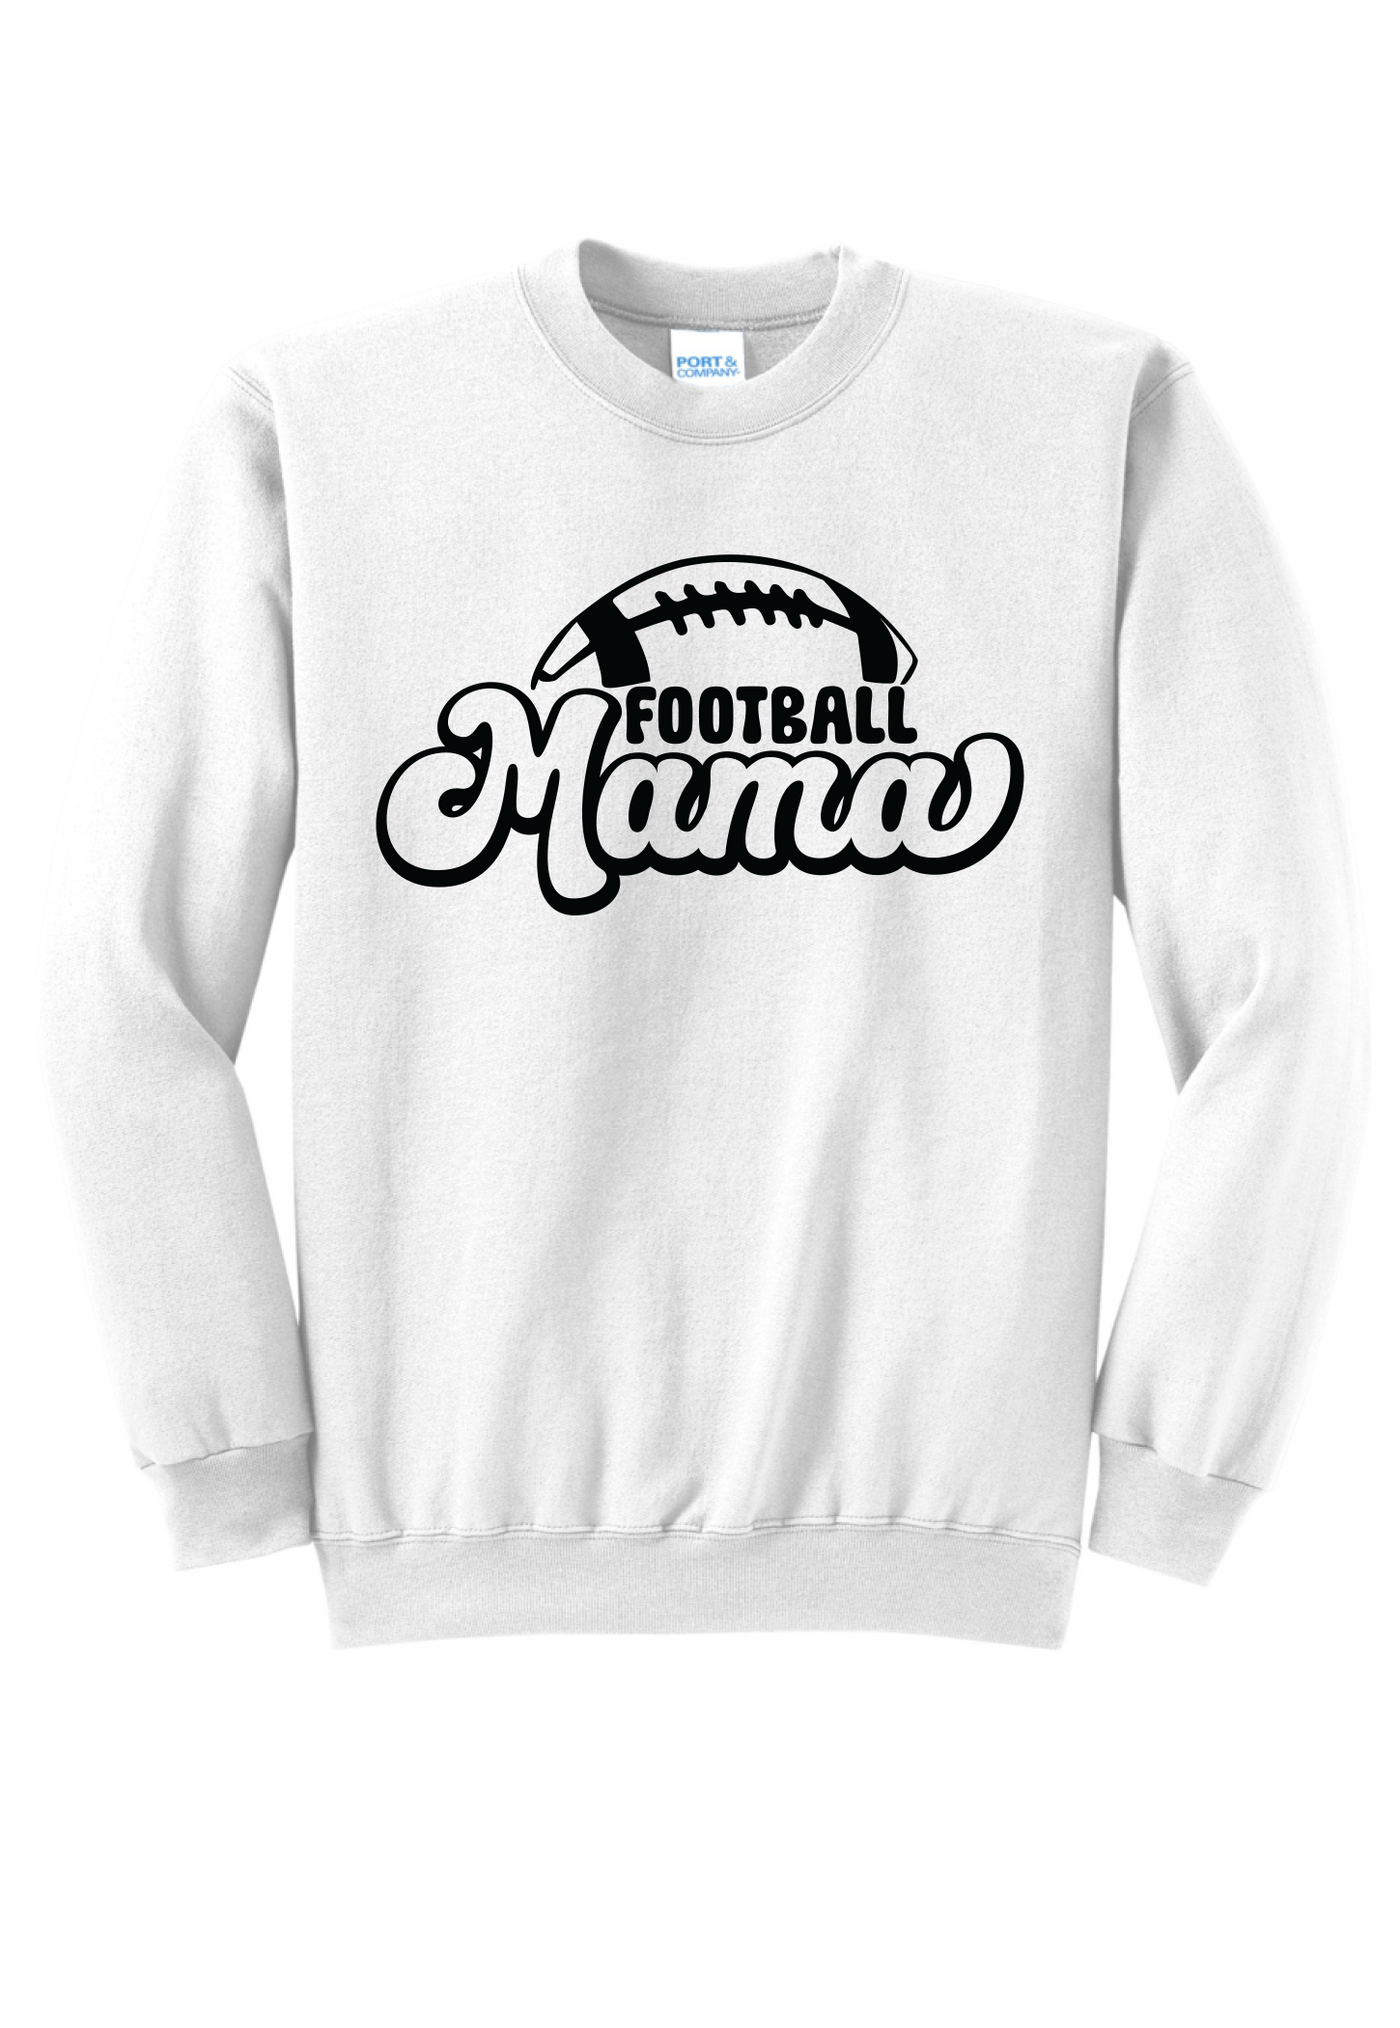 Football Mama Crew Neck - White - Y&S Designs, LLC